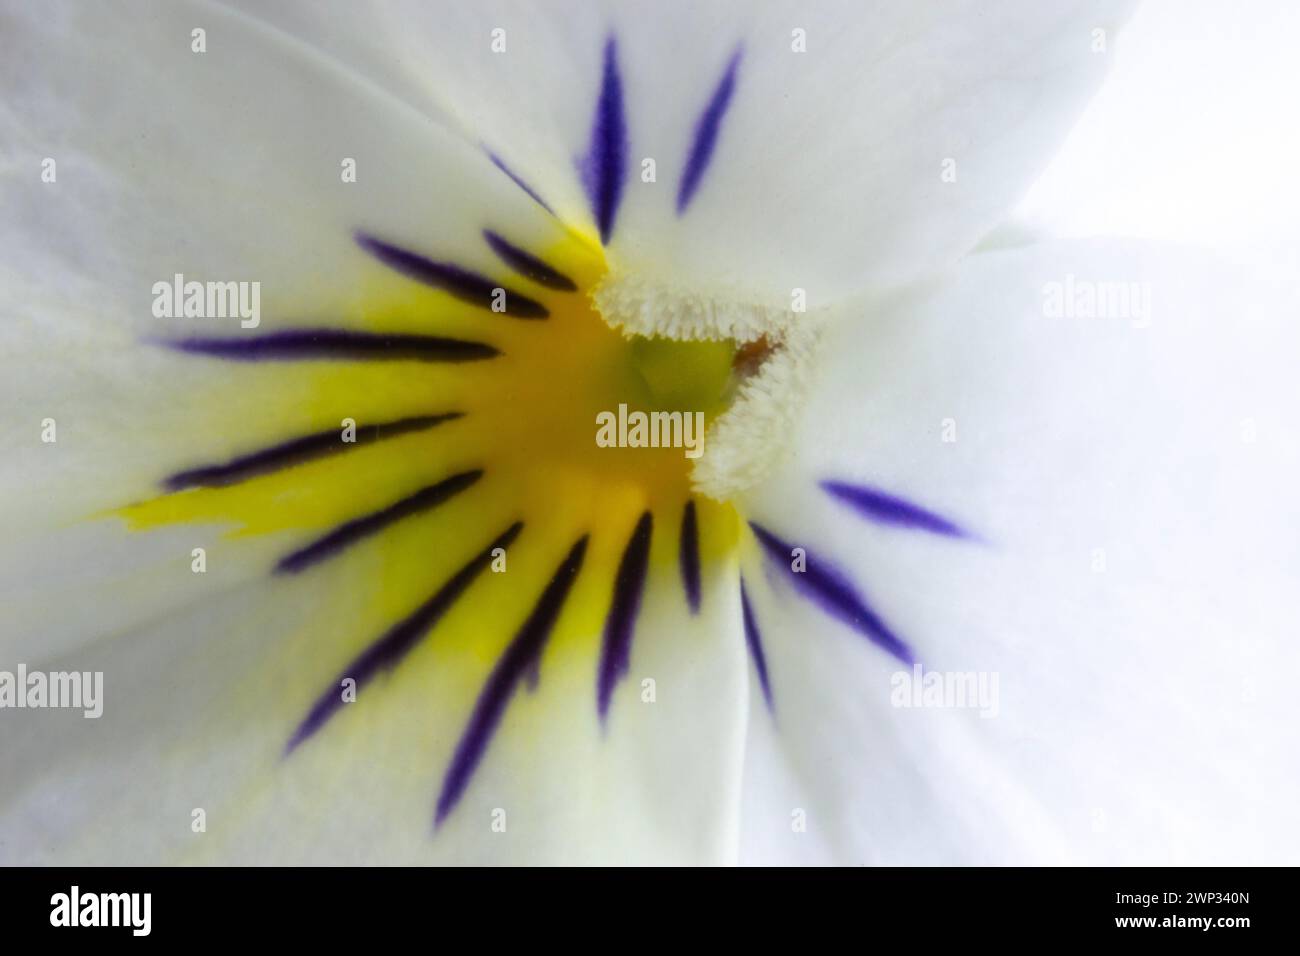 Macro photography of pansies flowers Stock Photo